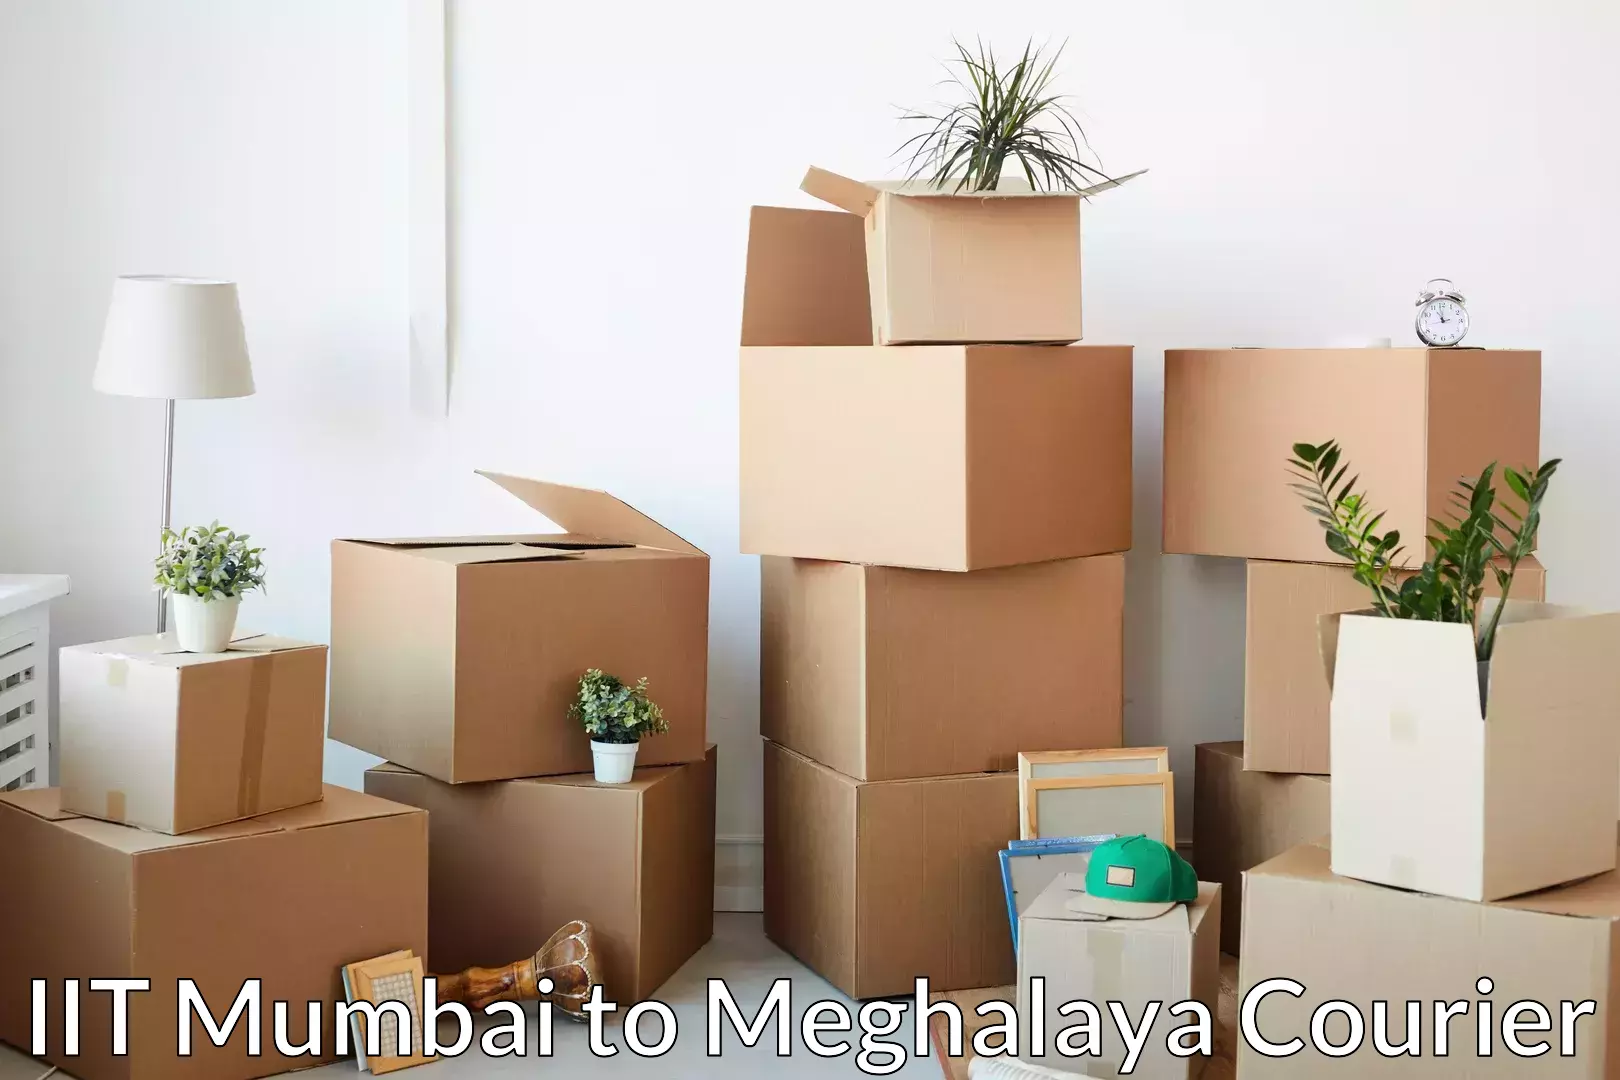 Cost-effective moving options IIT Mumbai to Meghalaya